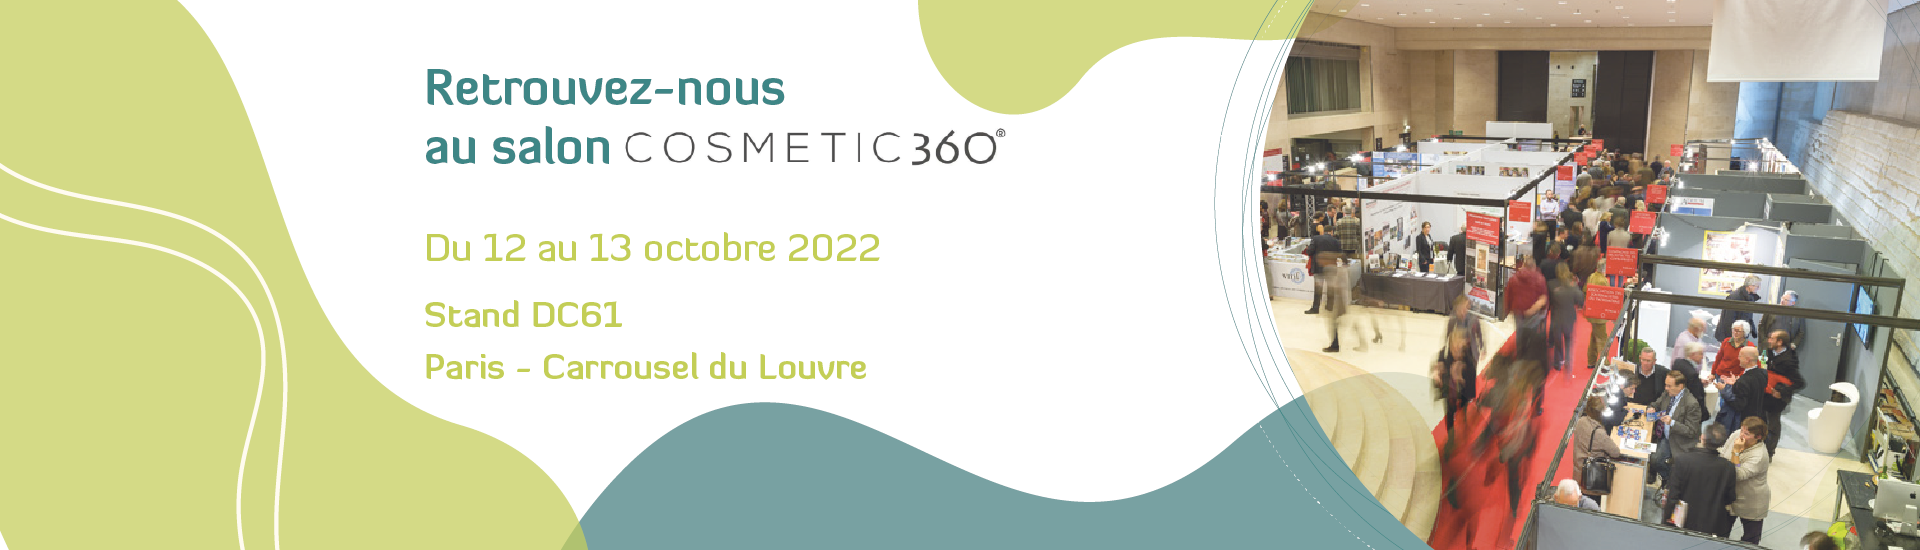 Invitation au salon Cosmetic 360